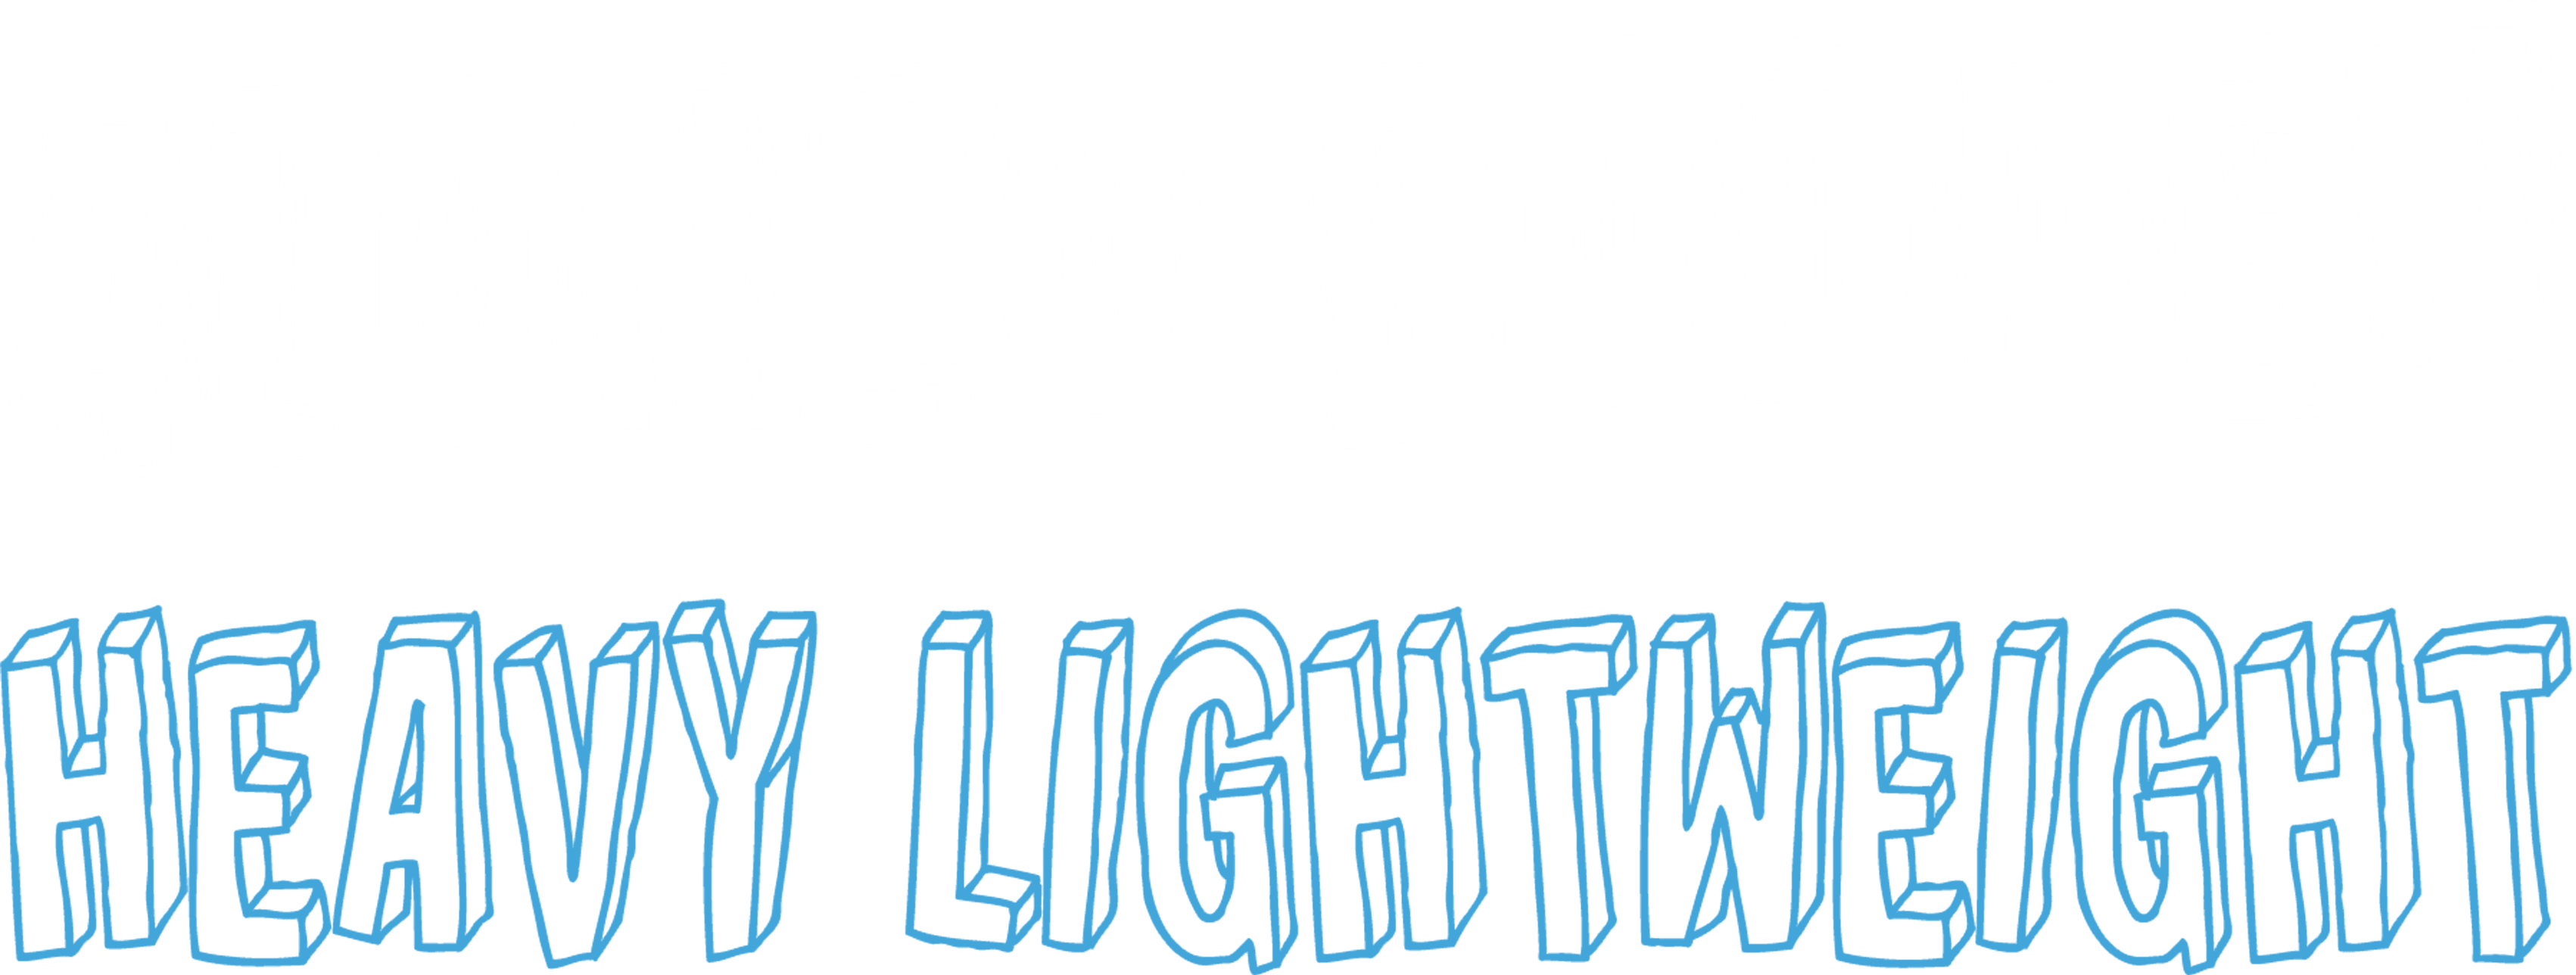 Alonzo Bodden: Heavy Lightweight logo